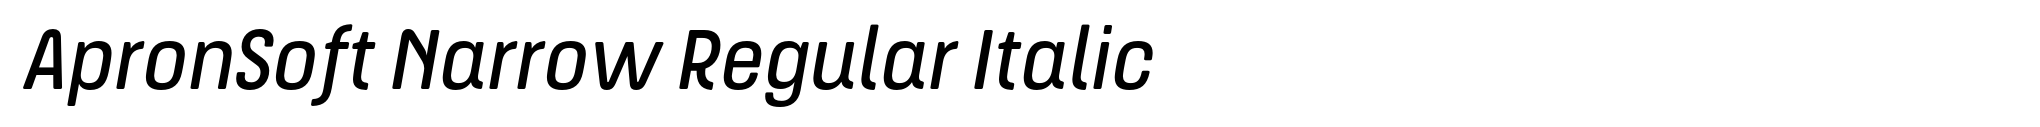 ApronSoft Narrow Regular Italic image